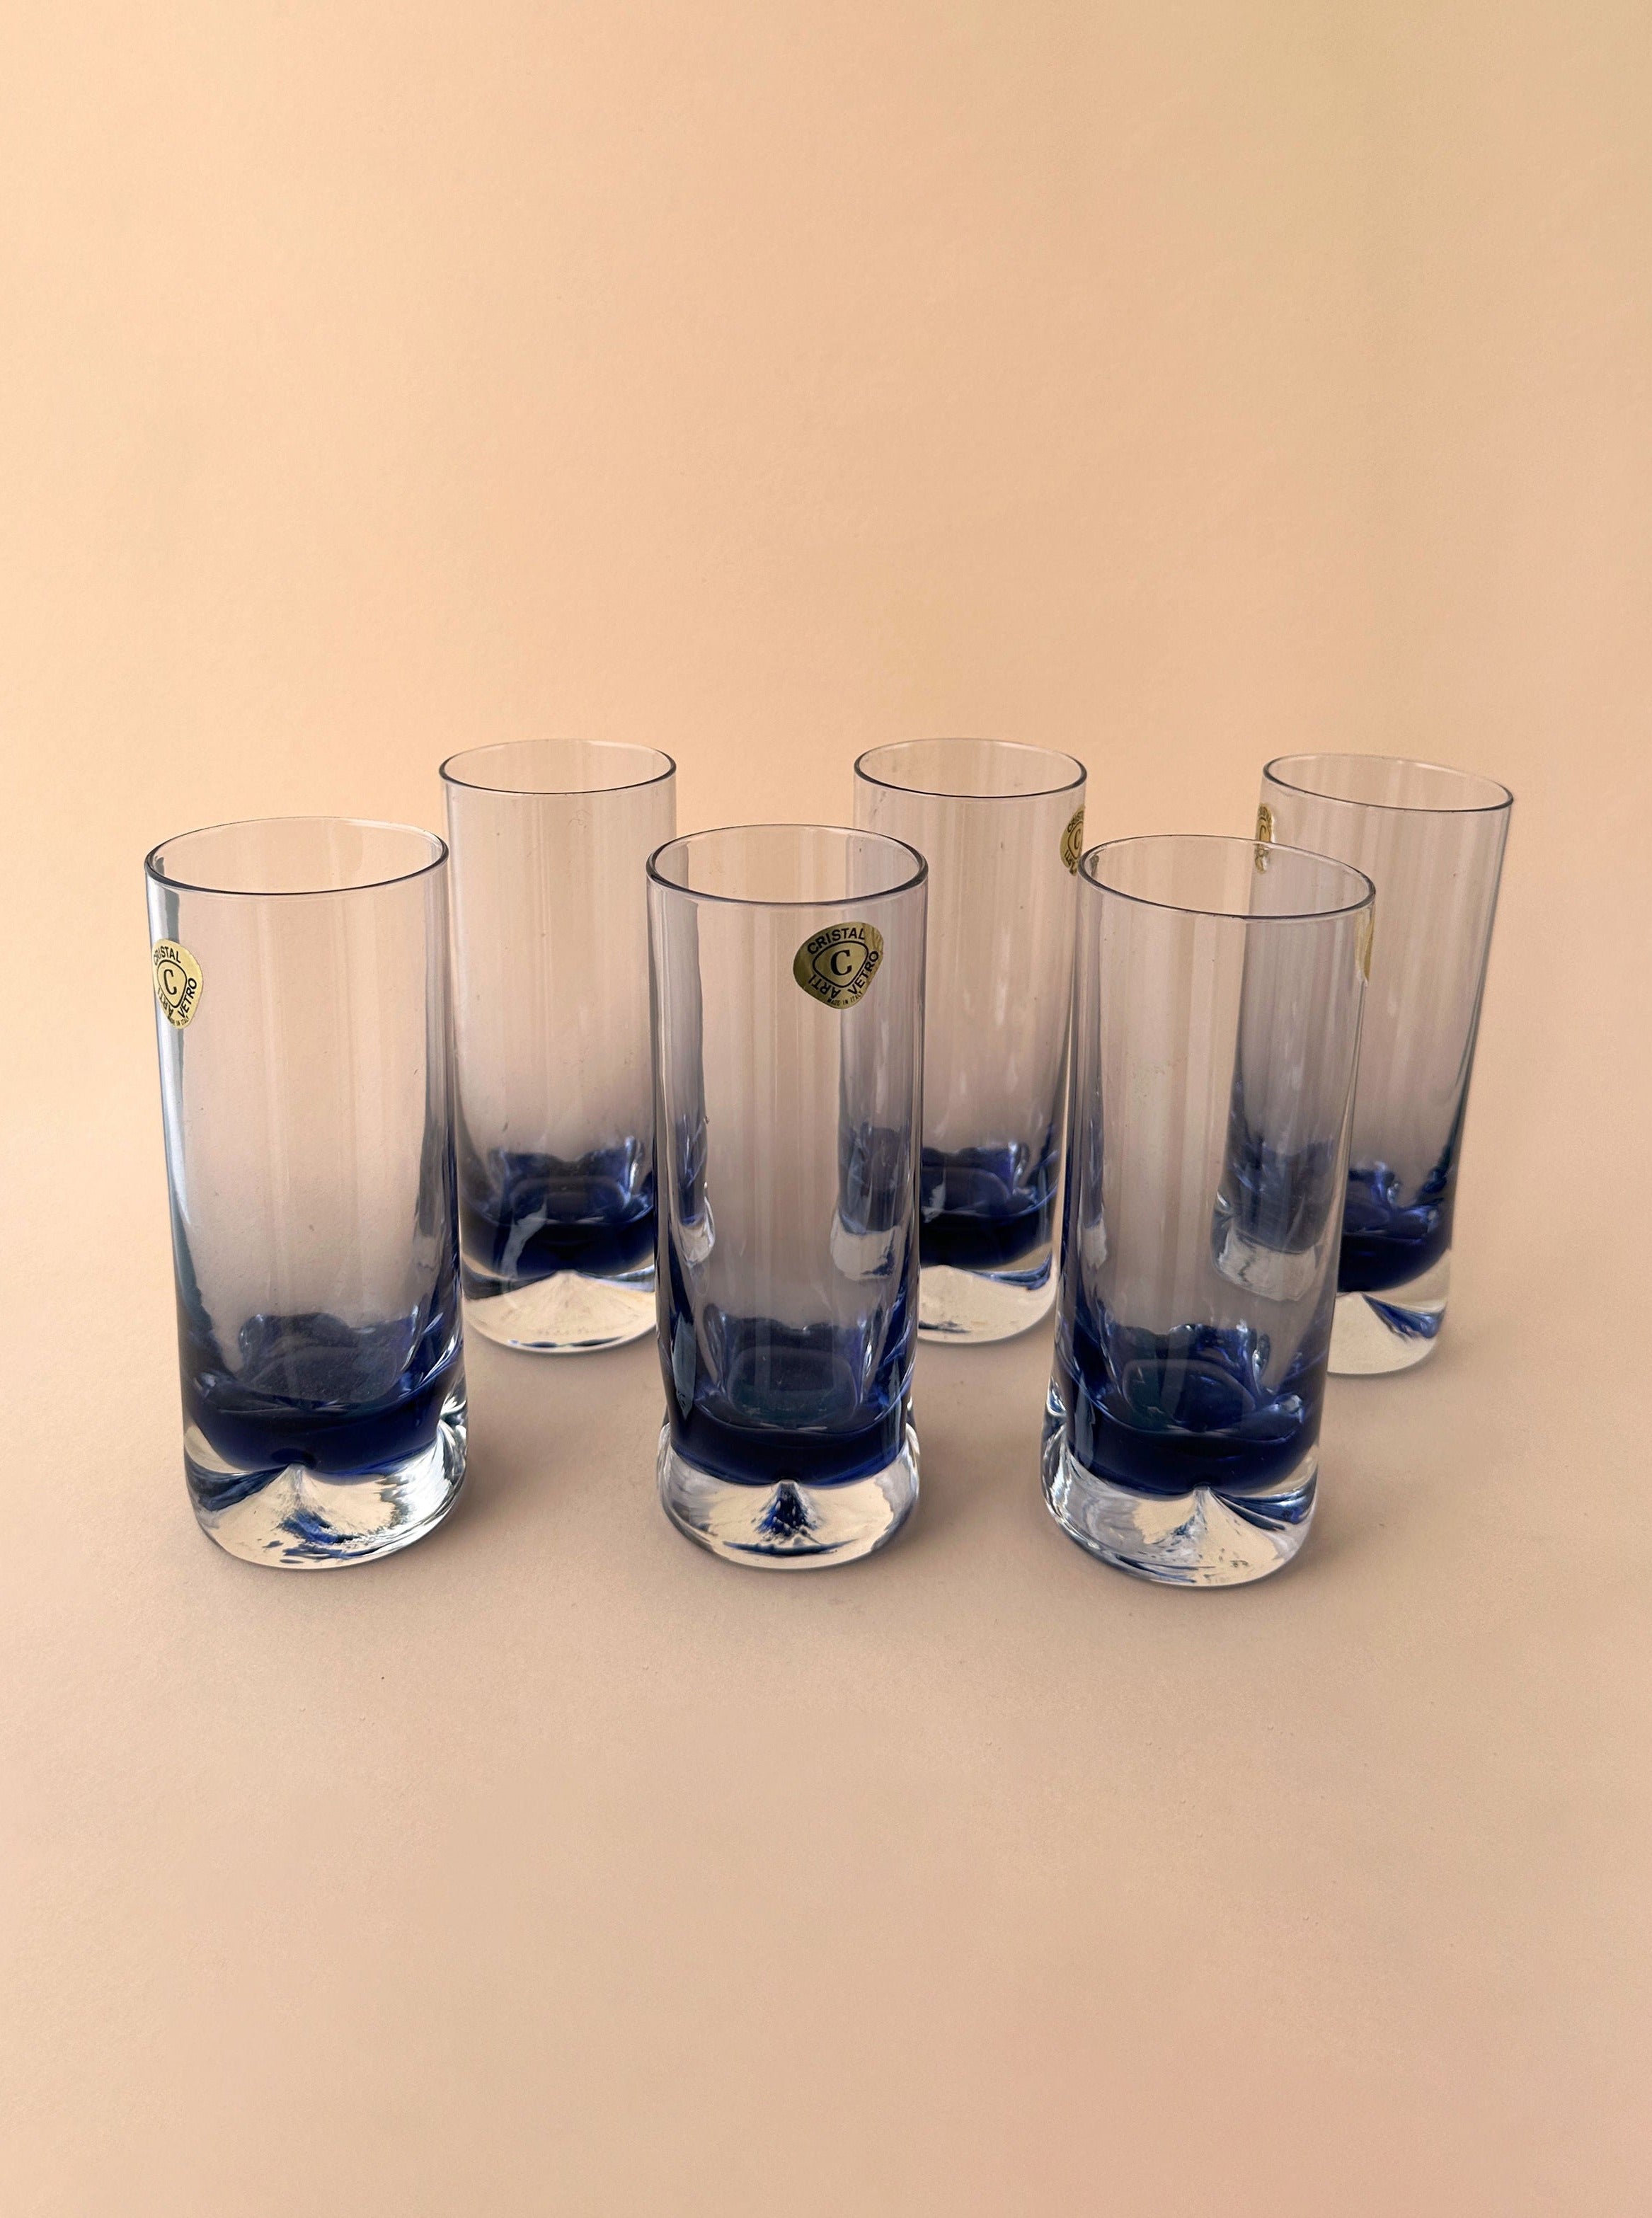 Vintage Block Crystal Highball and Tumbler Glasses in Cobalt Blue, Set of 6